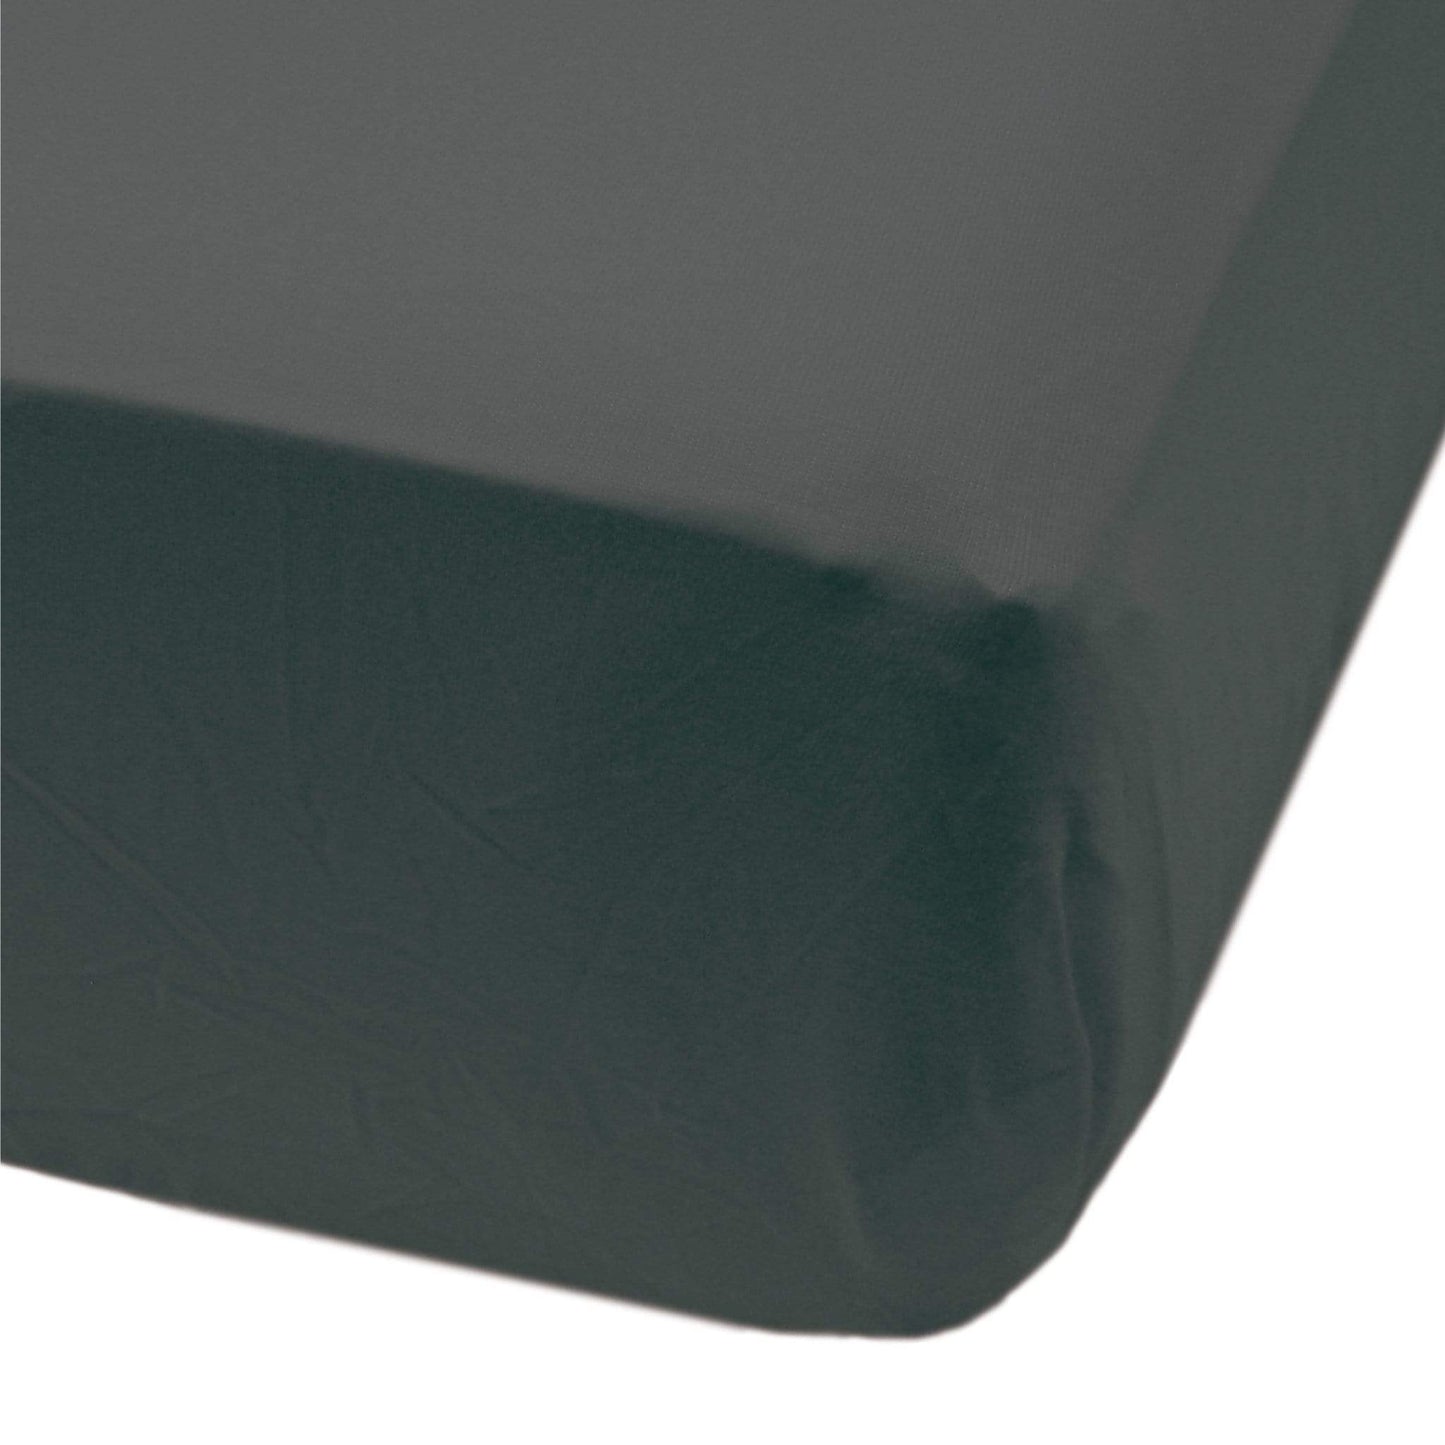 Crib flat sheet - Charcoal